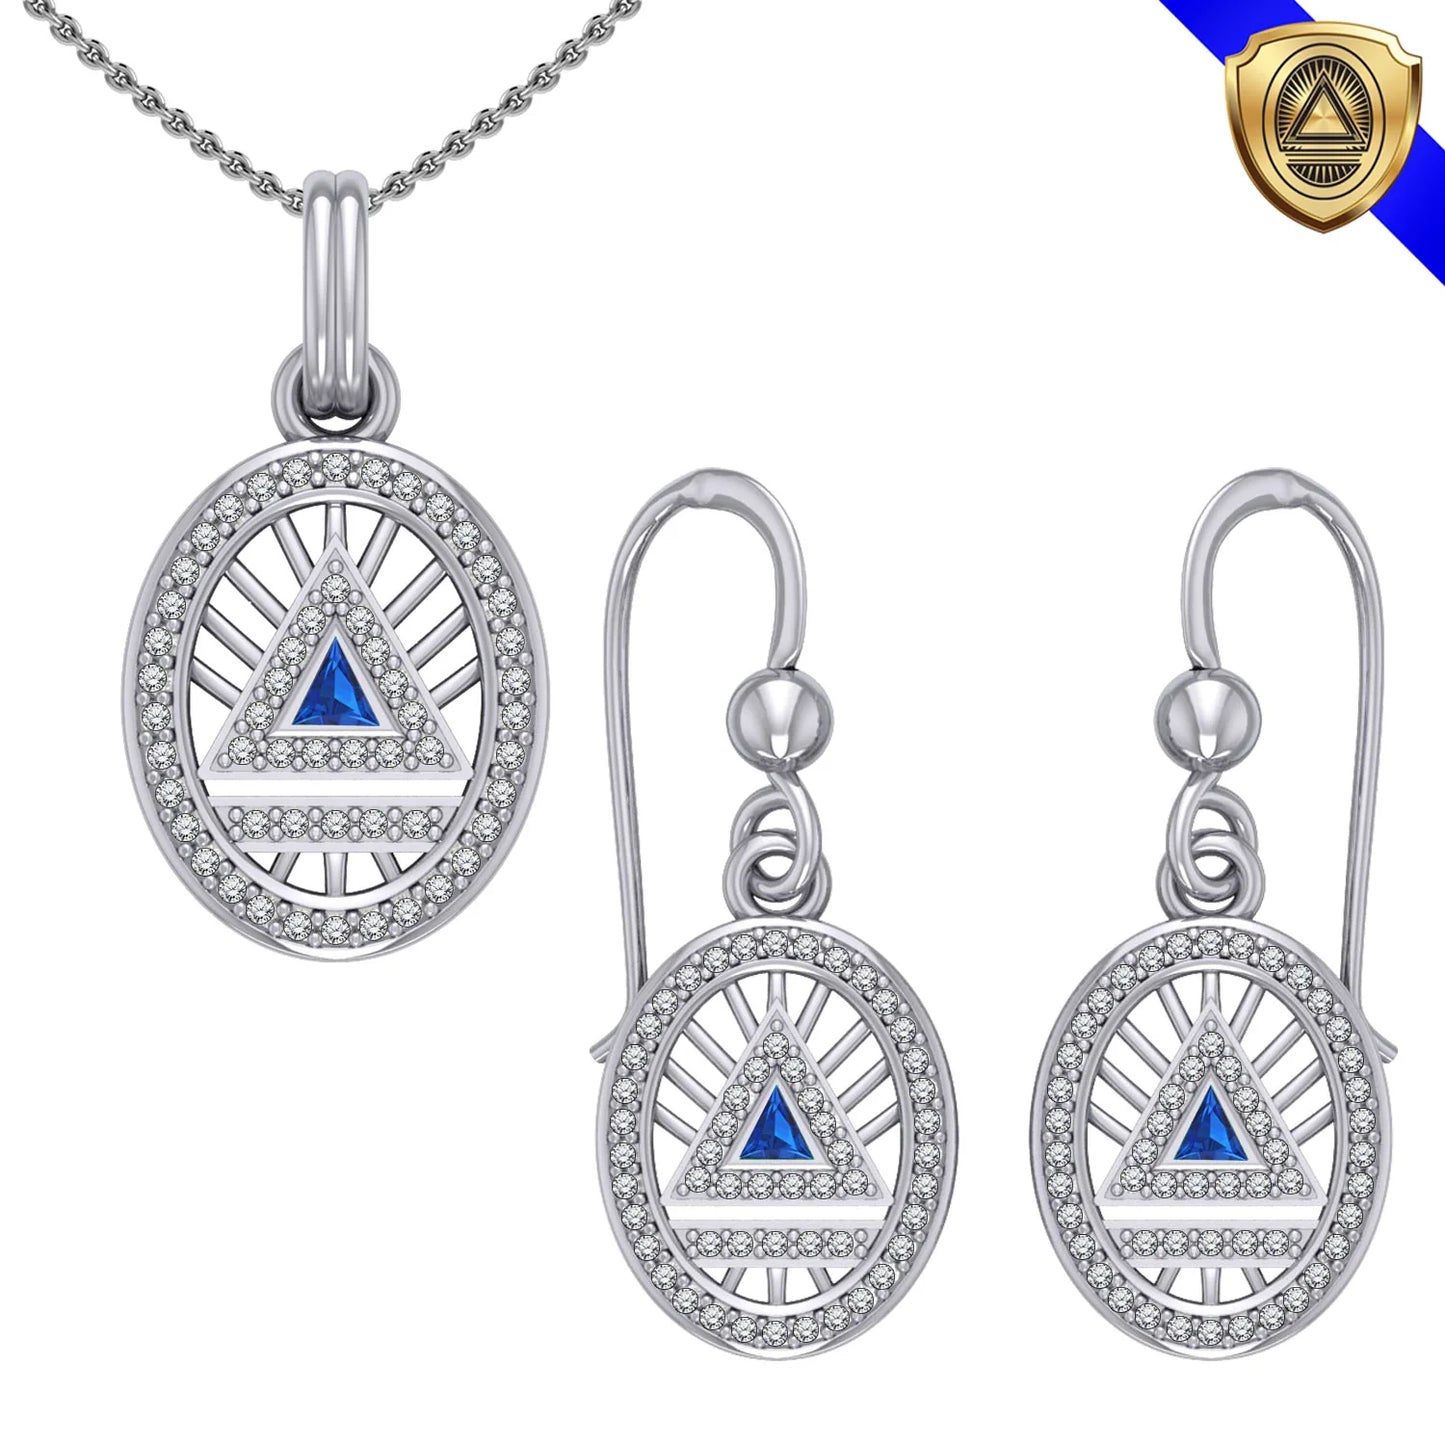 Women's Elegant System Symbol Pendant and Earring Set (Silver)